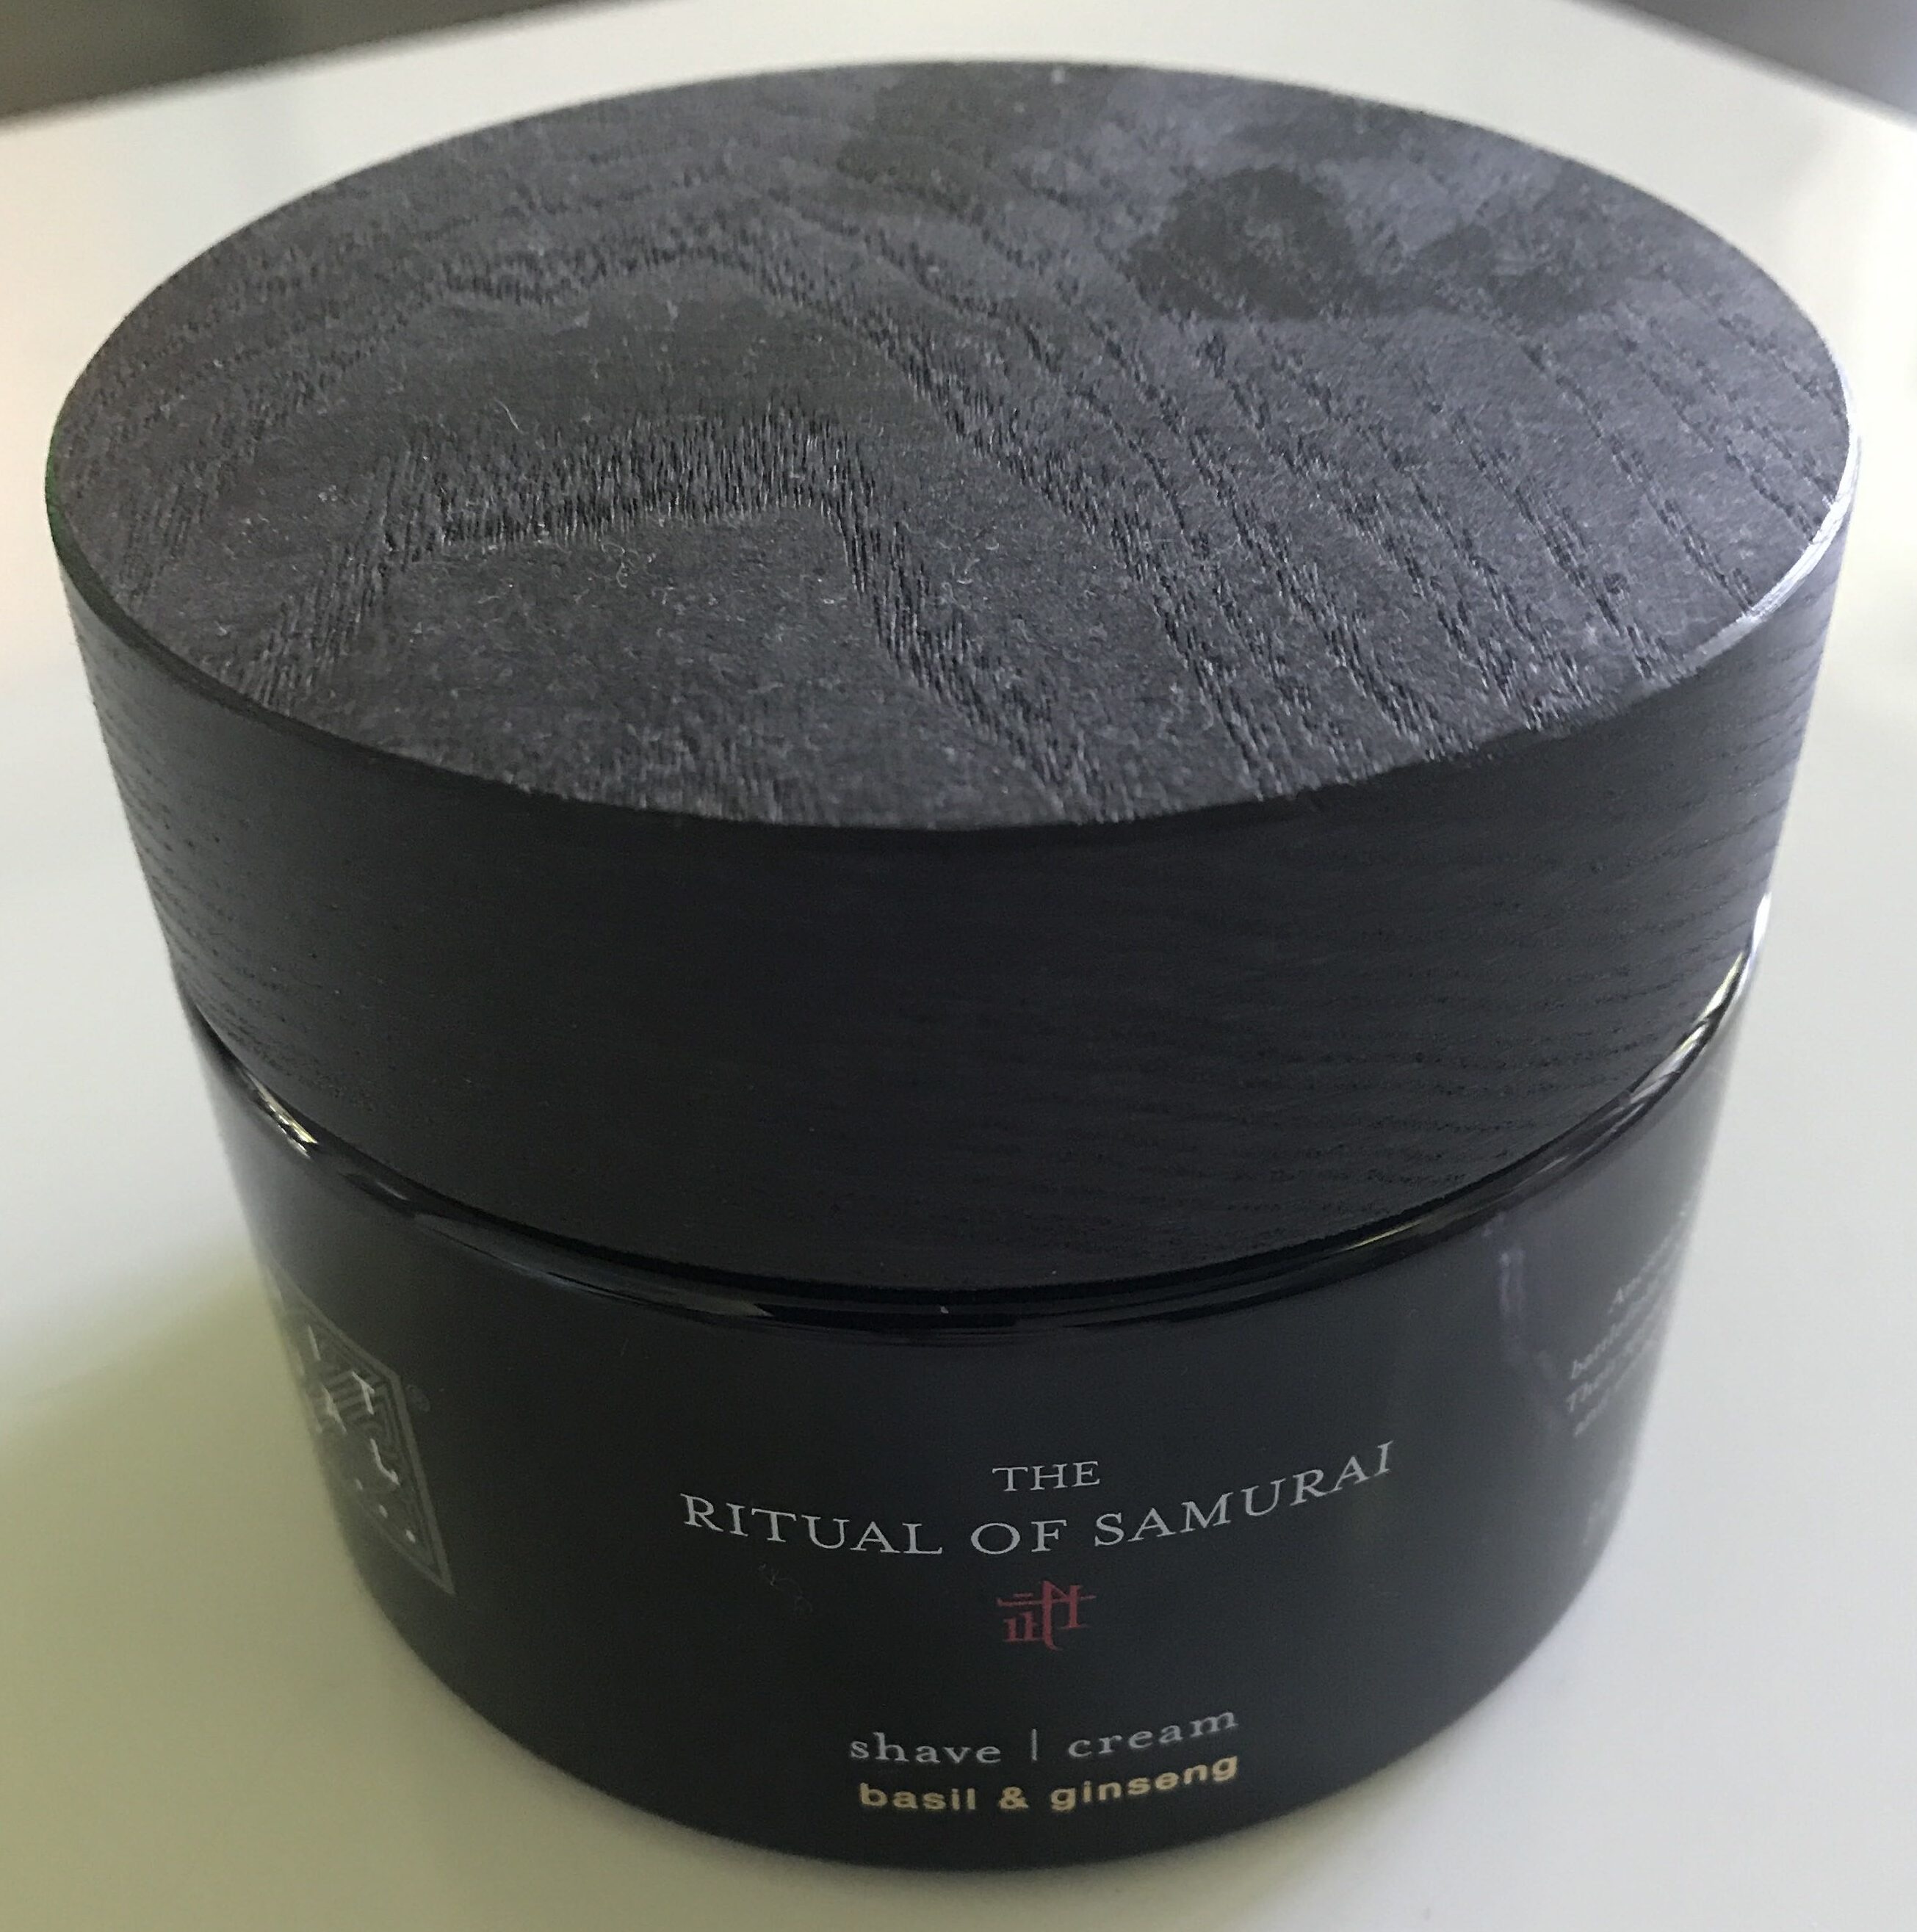 The Ritual of Samurai shave cream - Product - en